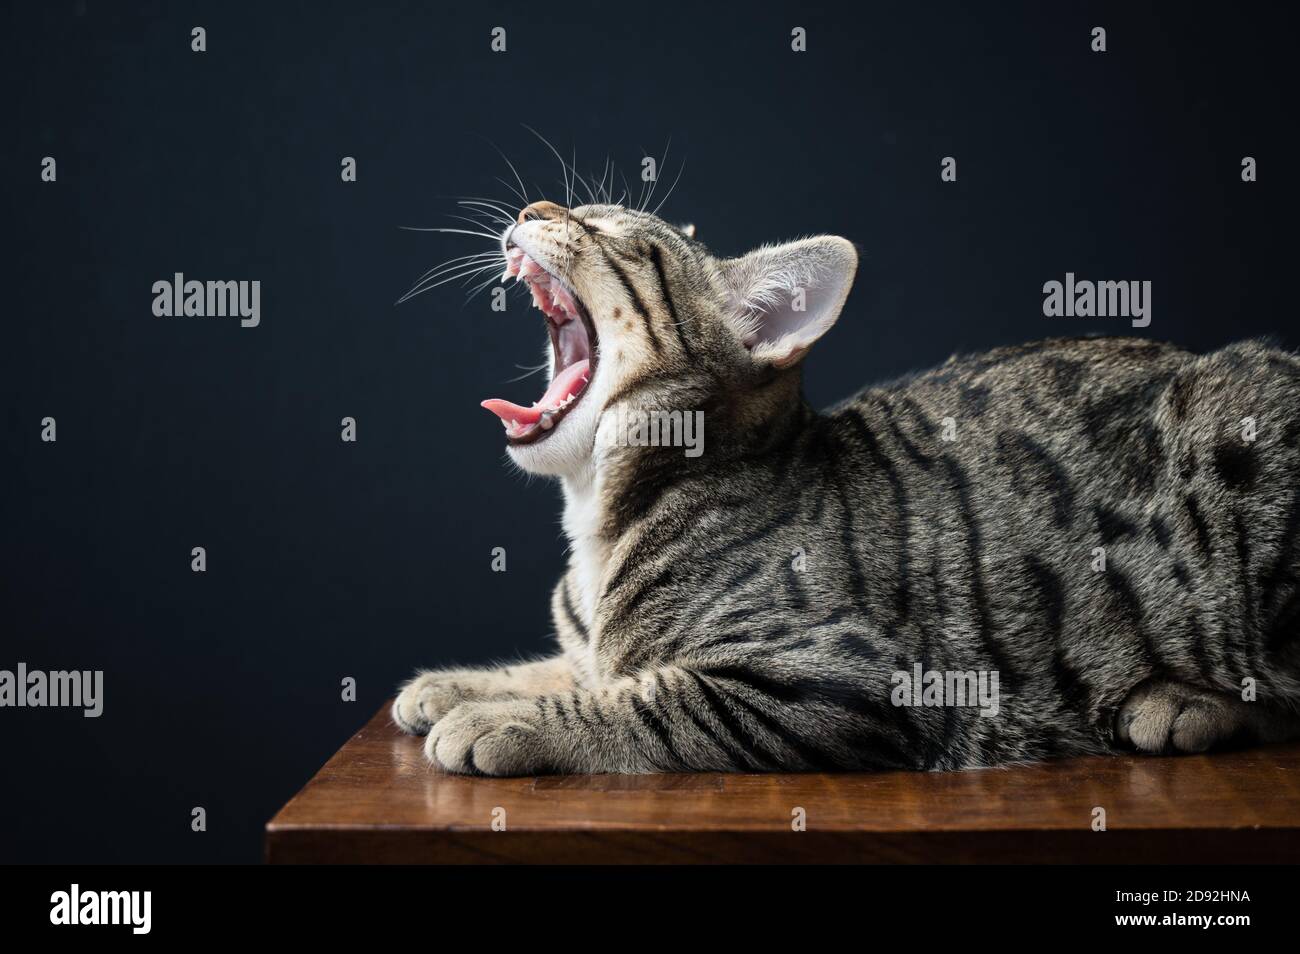 Yawning Tabby Cat Lying on Bench Against Black Background Stock Photo